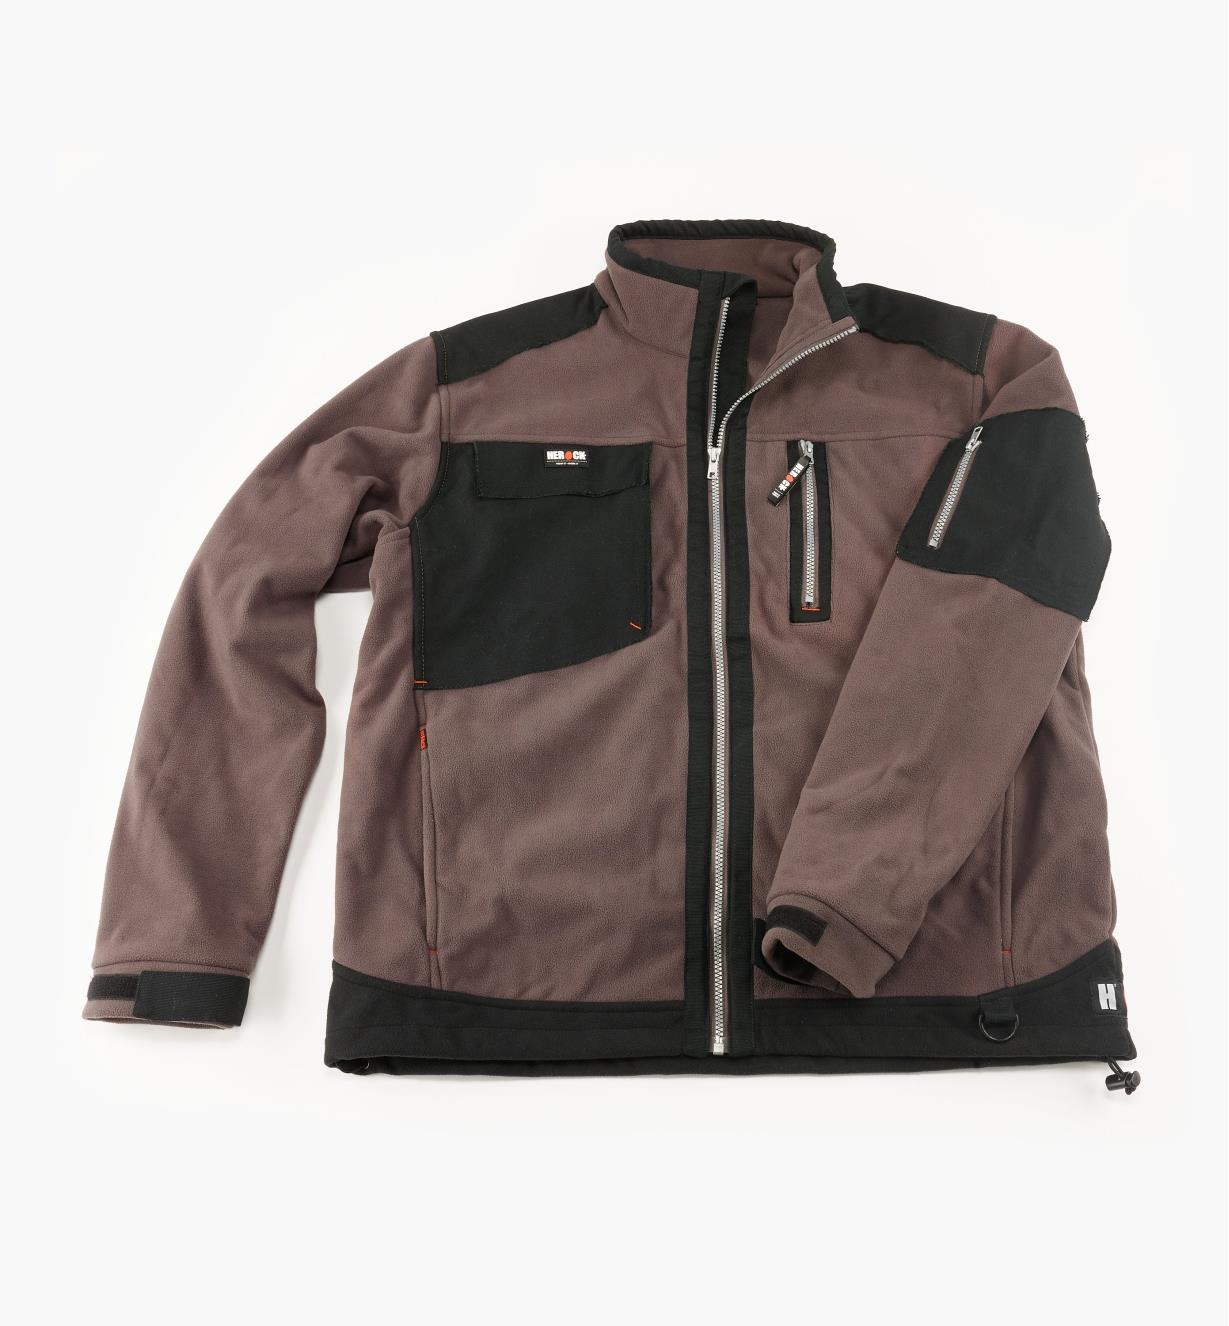 Herock Water-Resistant/Breathable Fleece Jacket